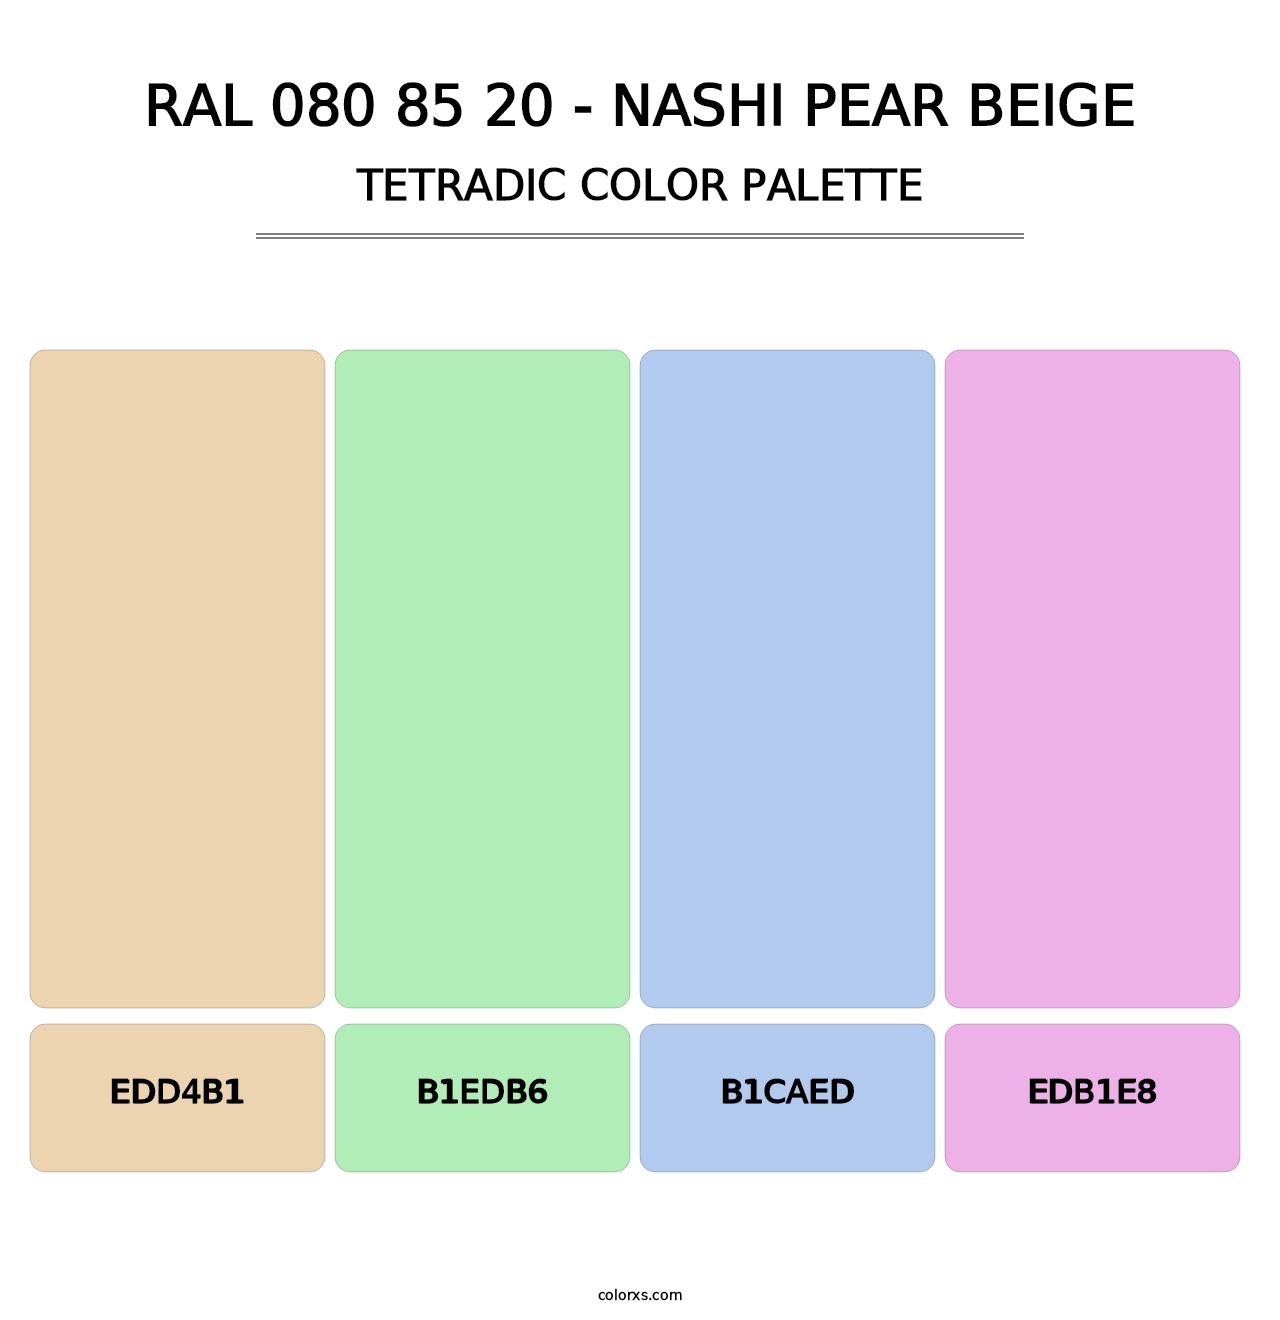 RAL 080 85 20 - Nashi Pear Beige - Tetradic Color Palette